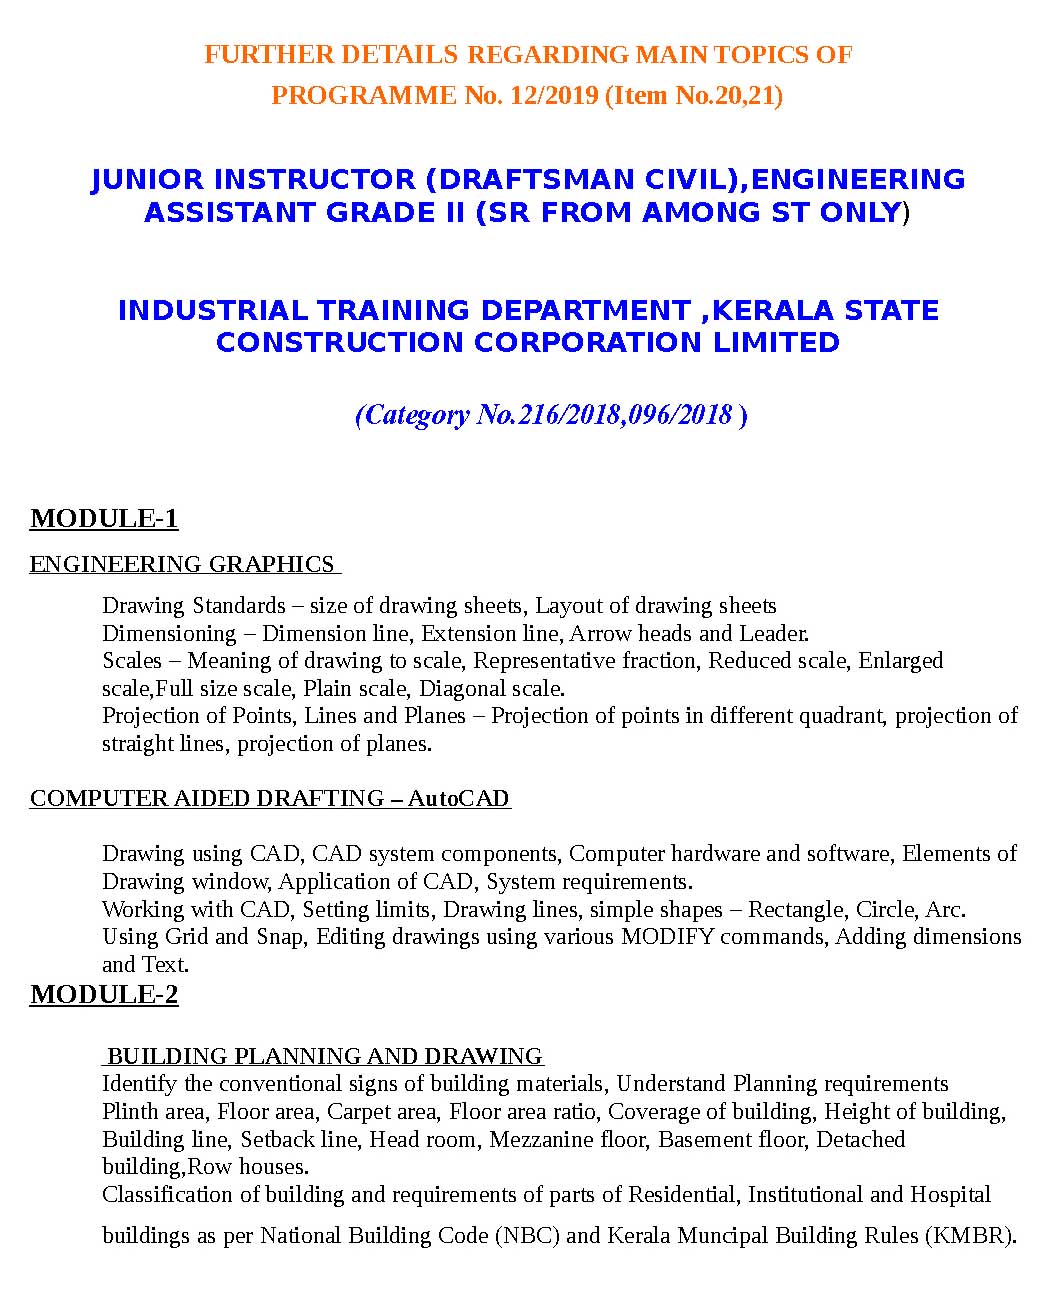 KPSC Syllabus Junior Instructor Draftsman Civil Dec 2019 - Notification Image 1